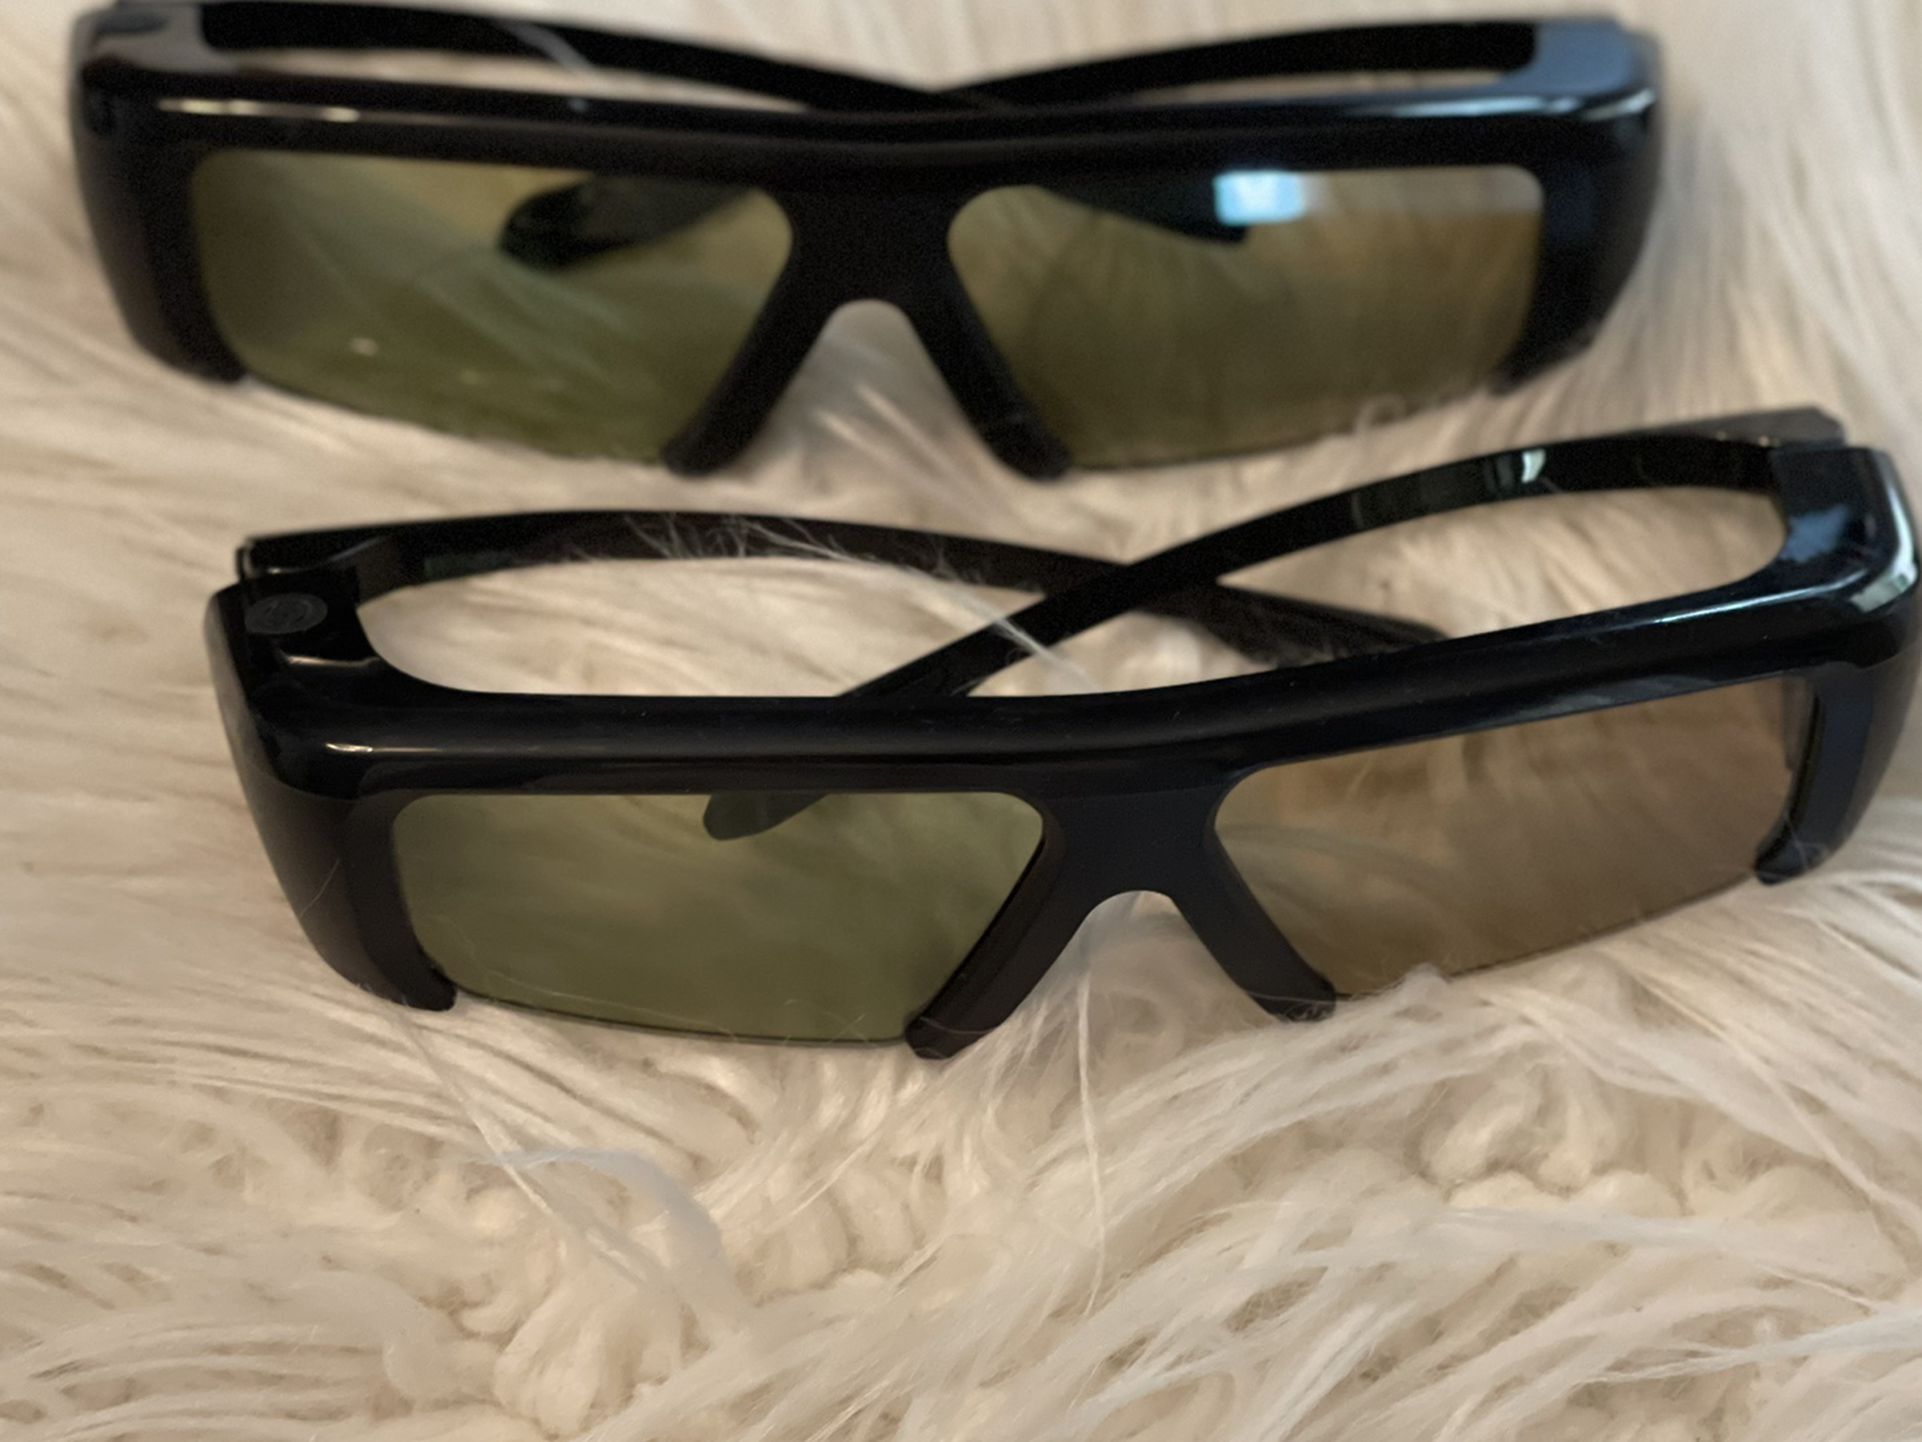 Samsung 3D Active Glasses